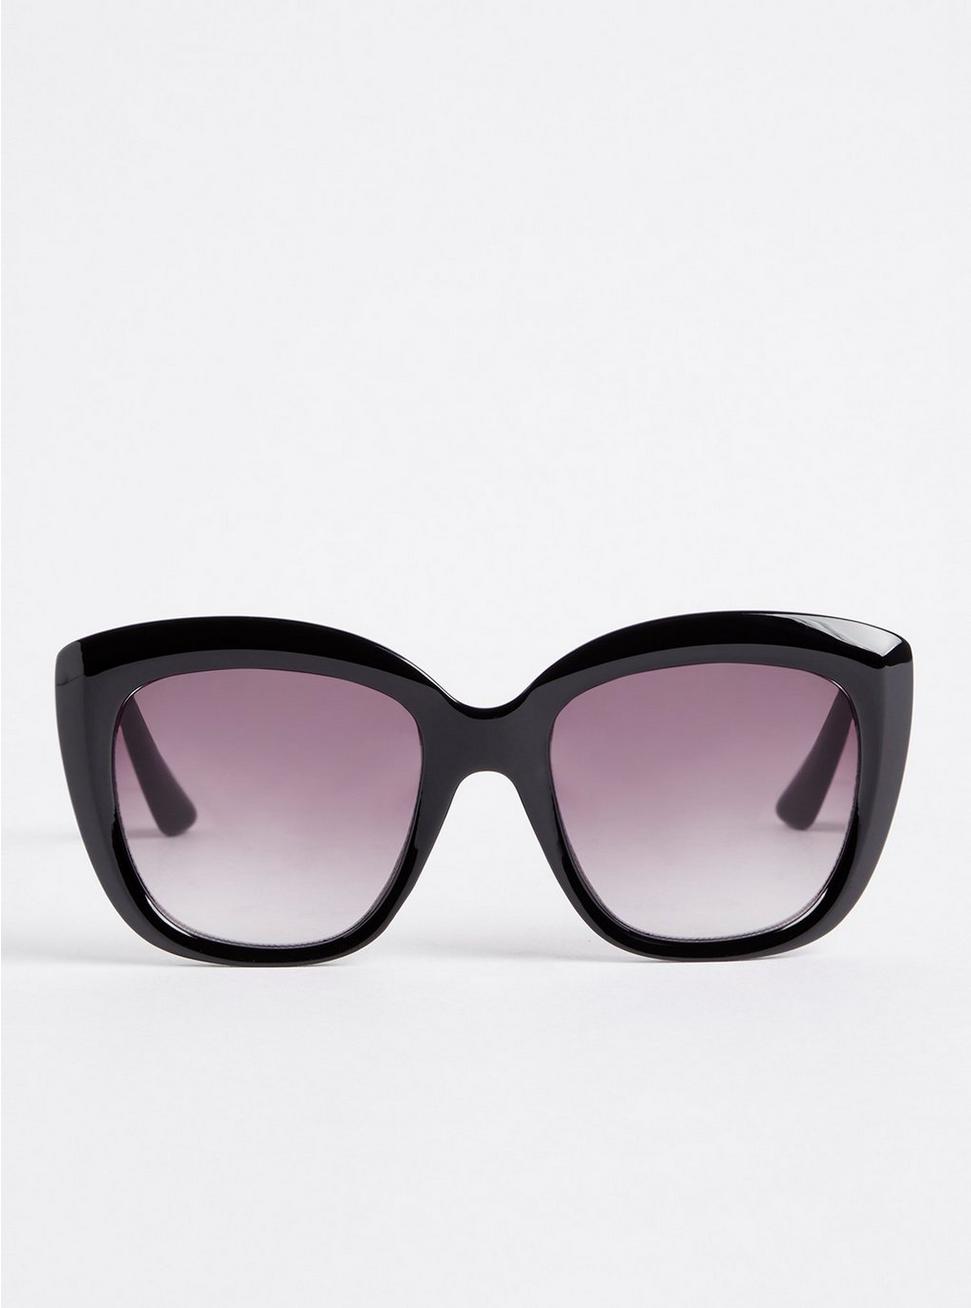 Plus Size - Classic Cateye Sunglasses - Black with Smoke Lens - Torrid